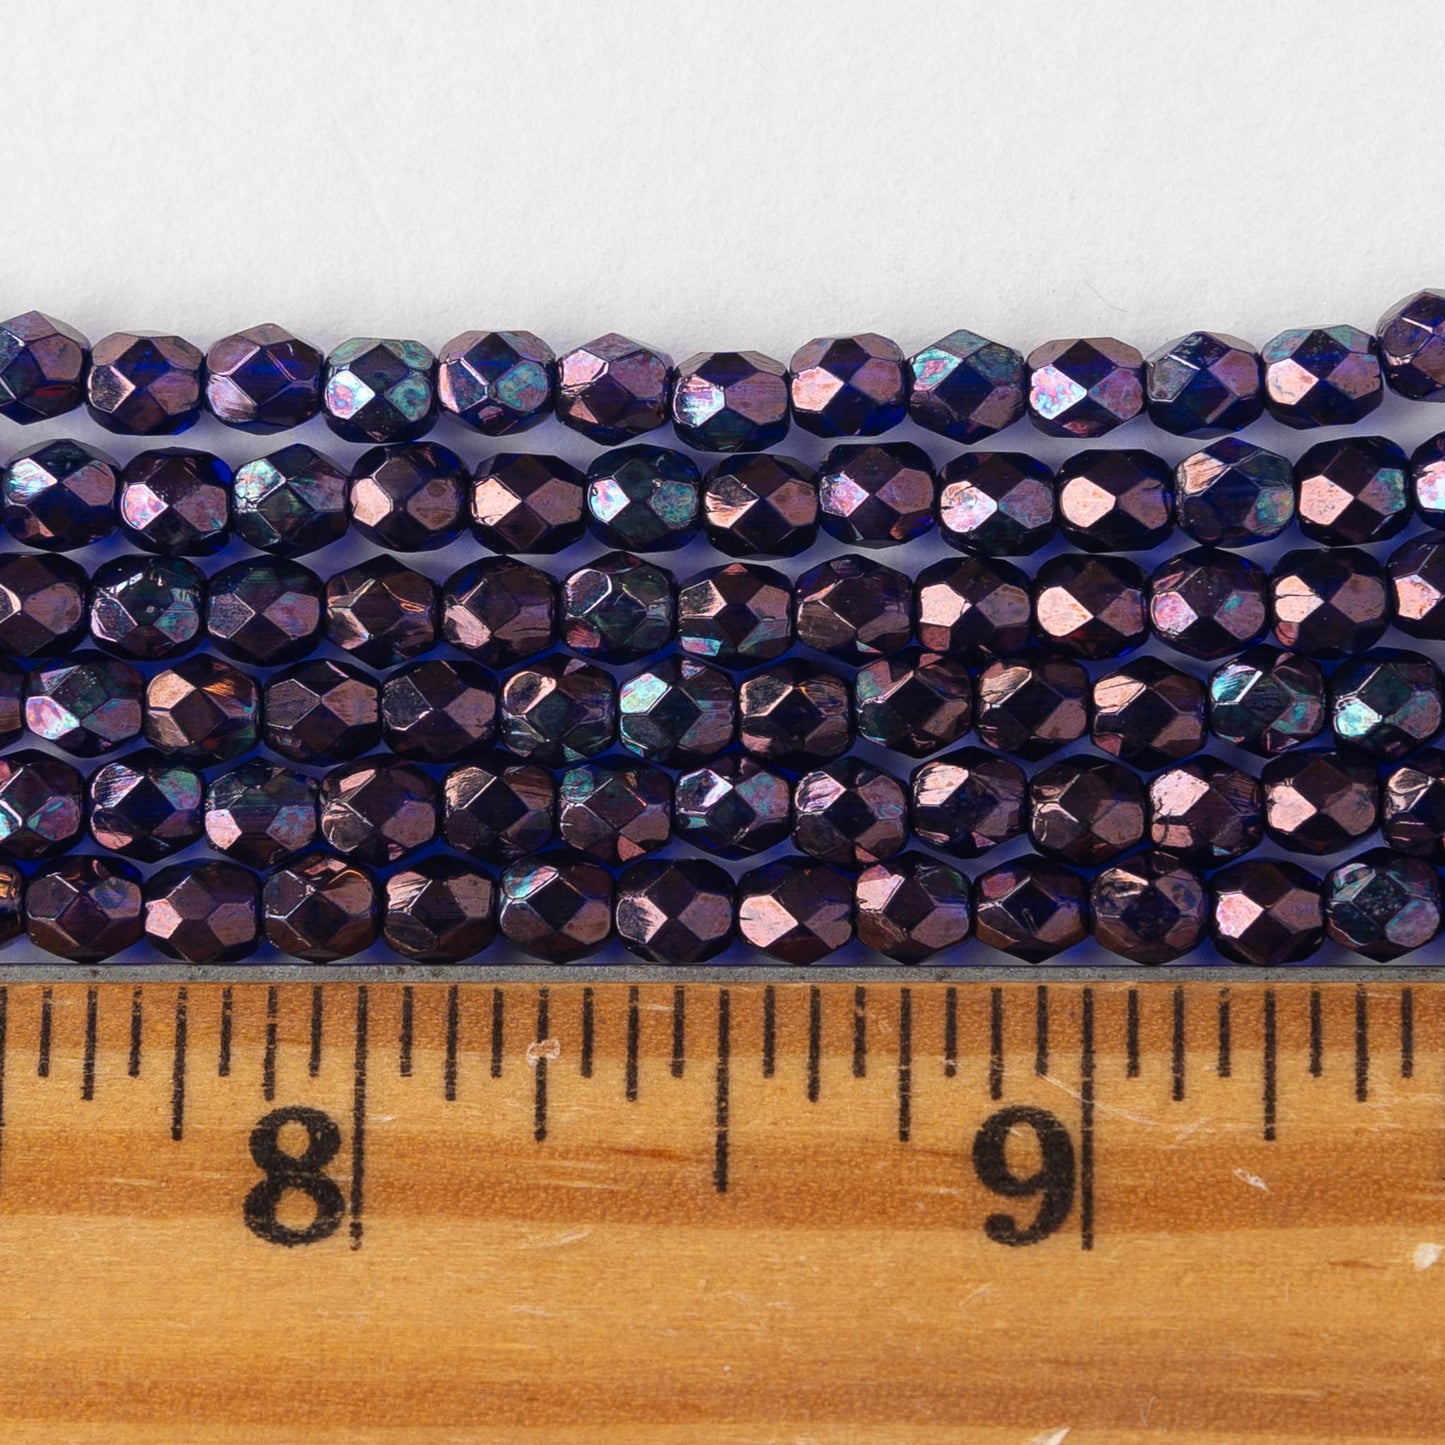 4mm Faceted Round Beads - Cobalt Blue Vega - 50 beads